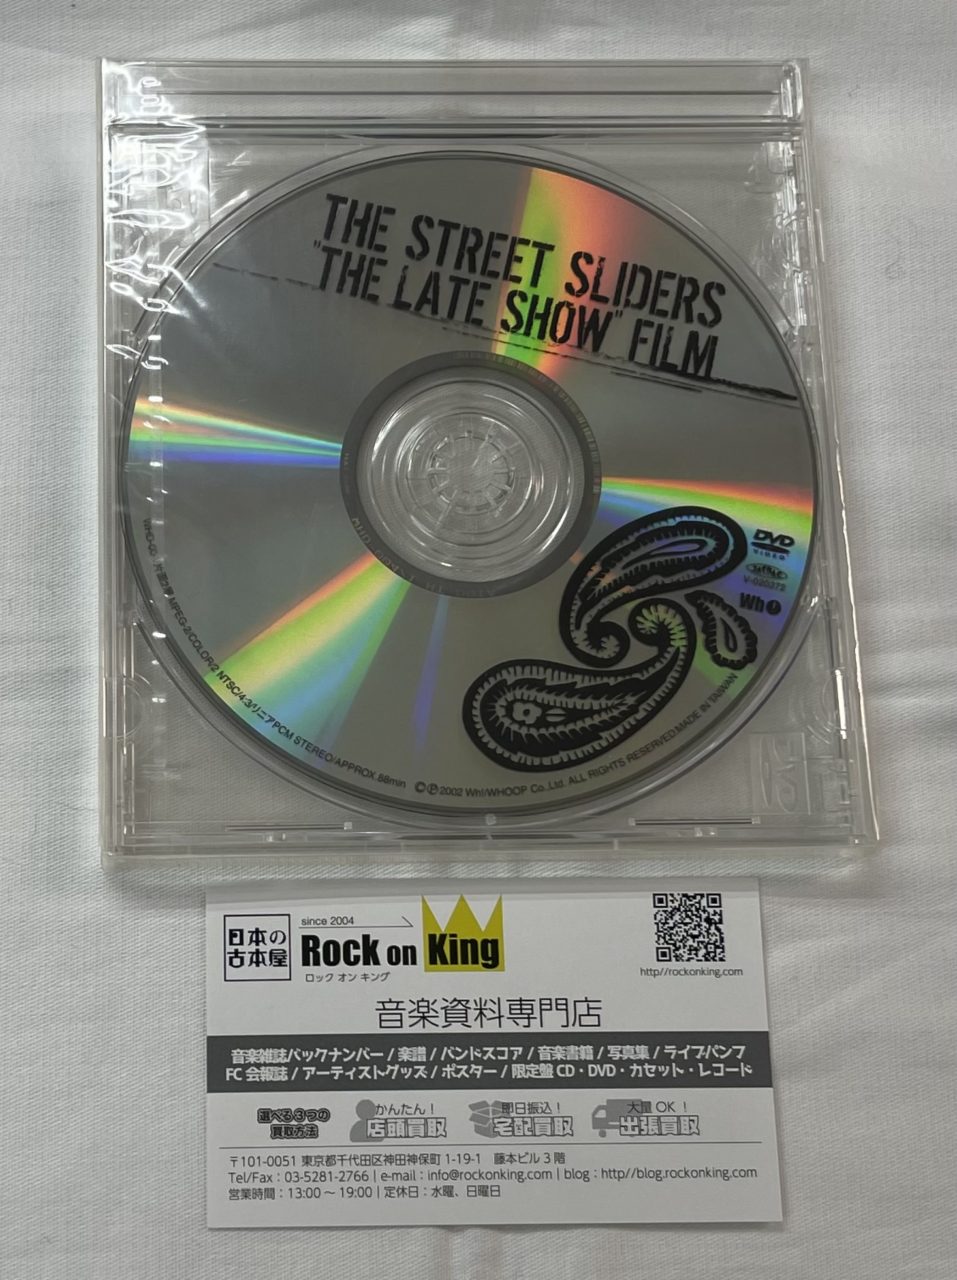 THE STREET SLIDERS 限定DVD THE LAST SHOW FILM 修正版 | 音楽資料 